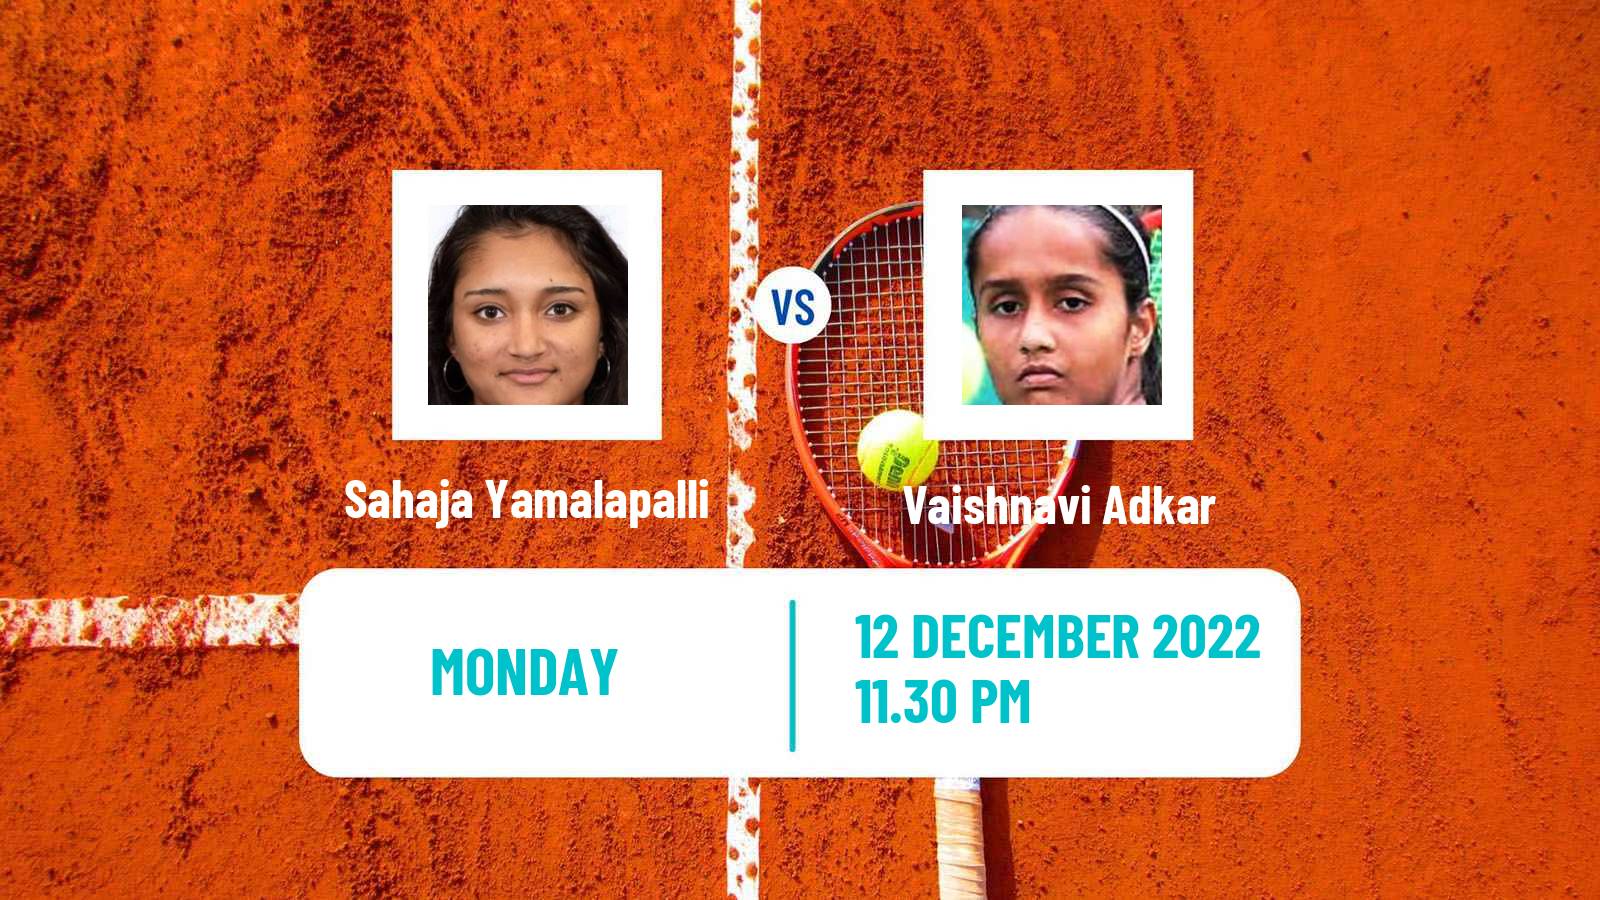 Tennis ITF Tournaments Sahaja Yamalapalli - Vaishnavi Adkar